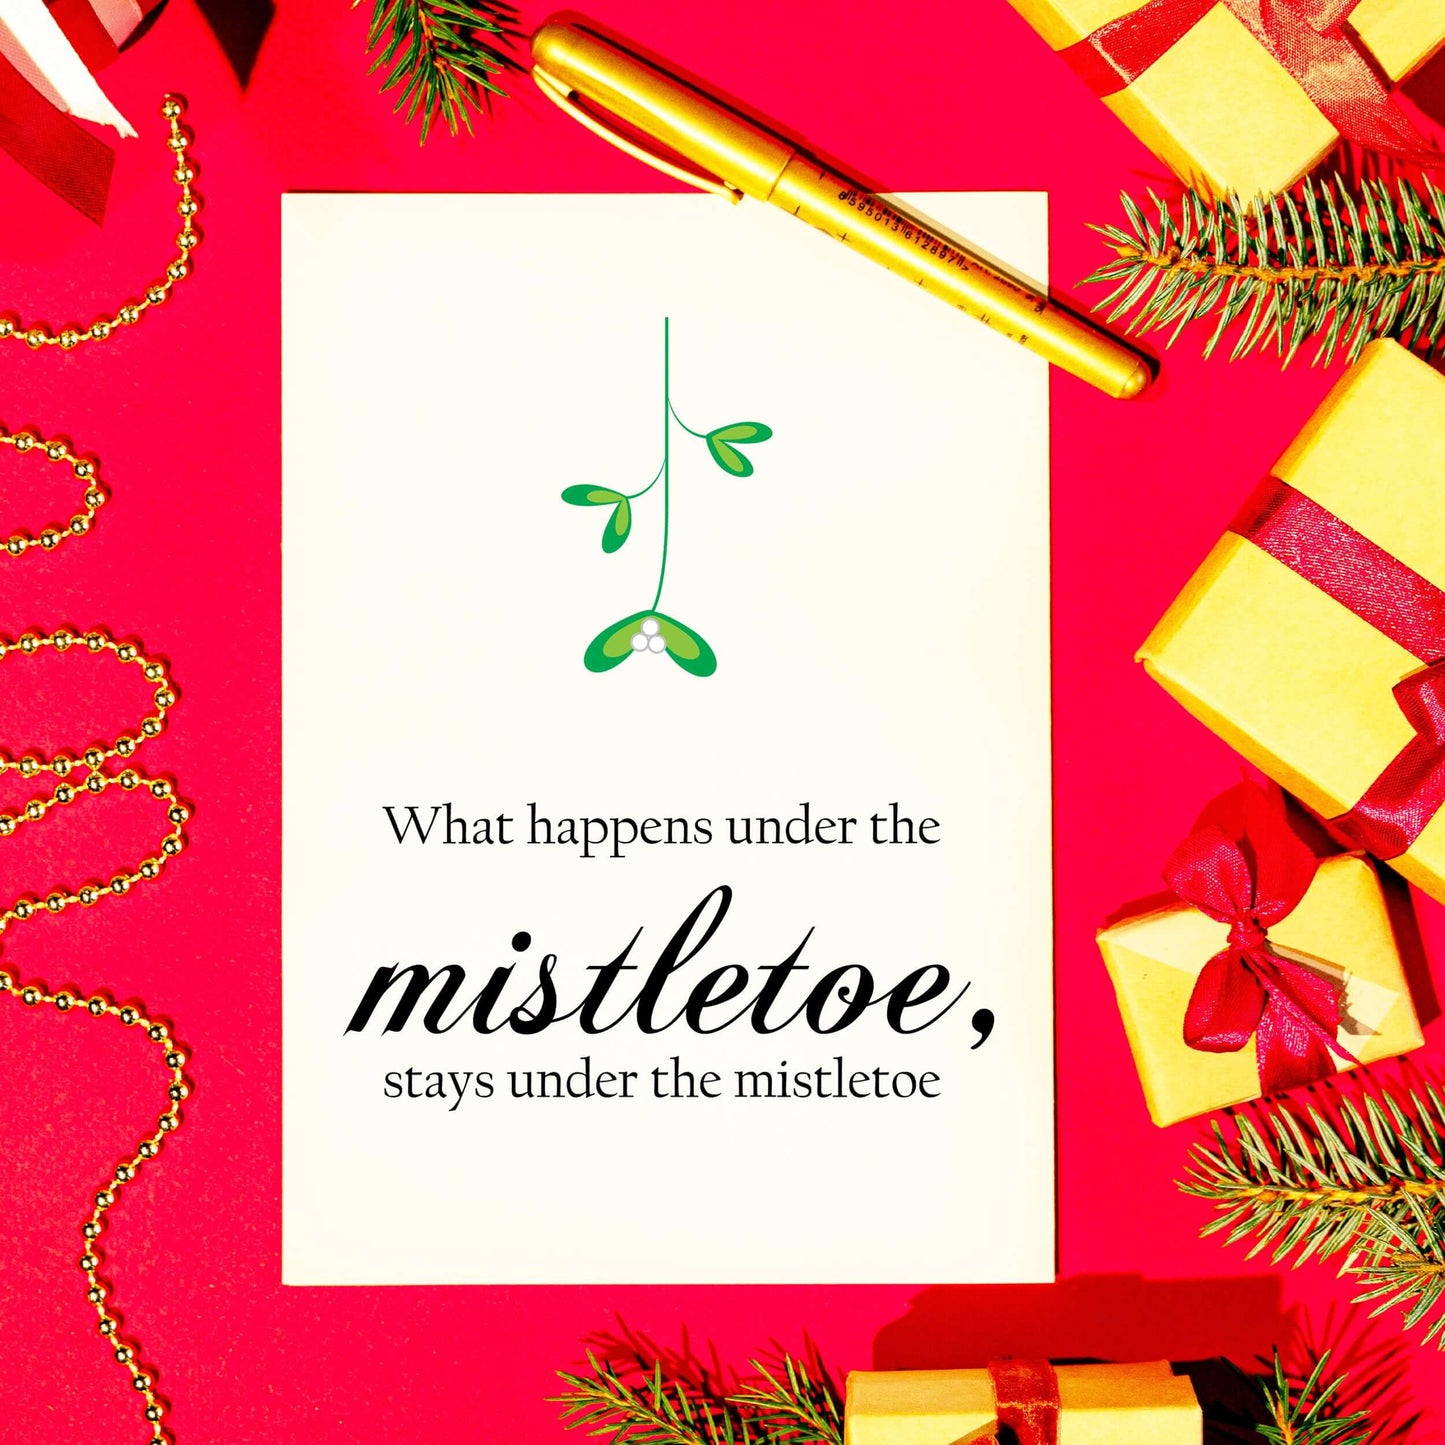 Little Kraken's What Happens Under The Mistletoe, Stays Under the Mistletoe Funny Christmas Greeting Card, Christmas Cards for £3.50 each